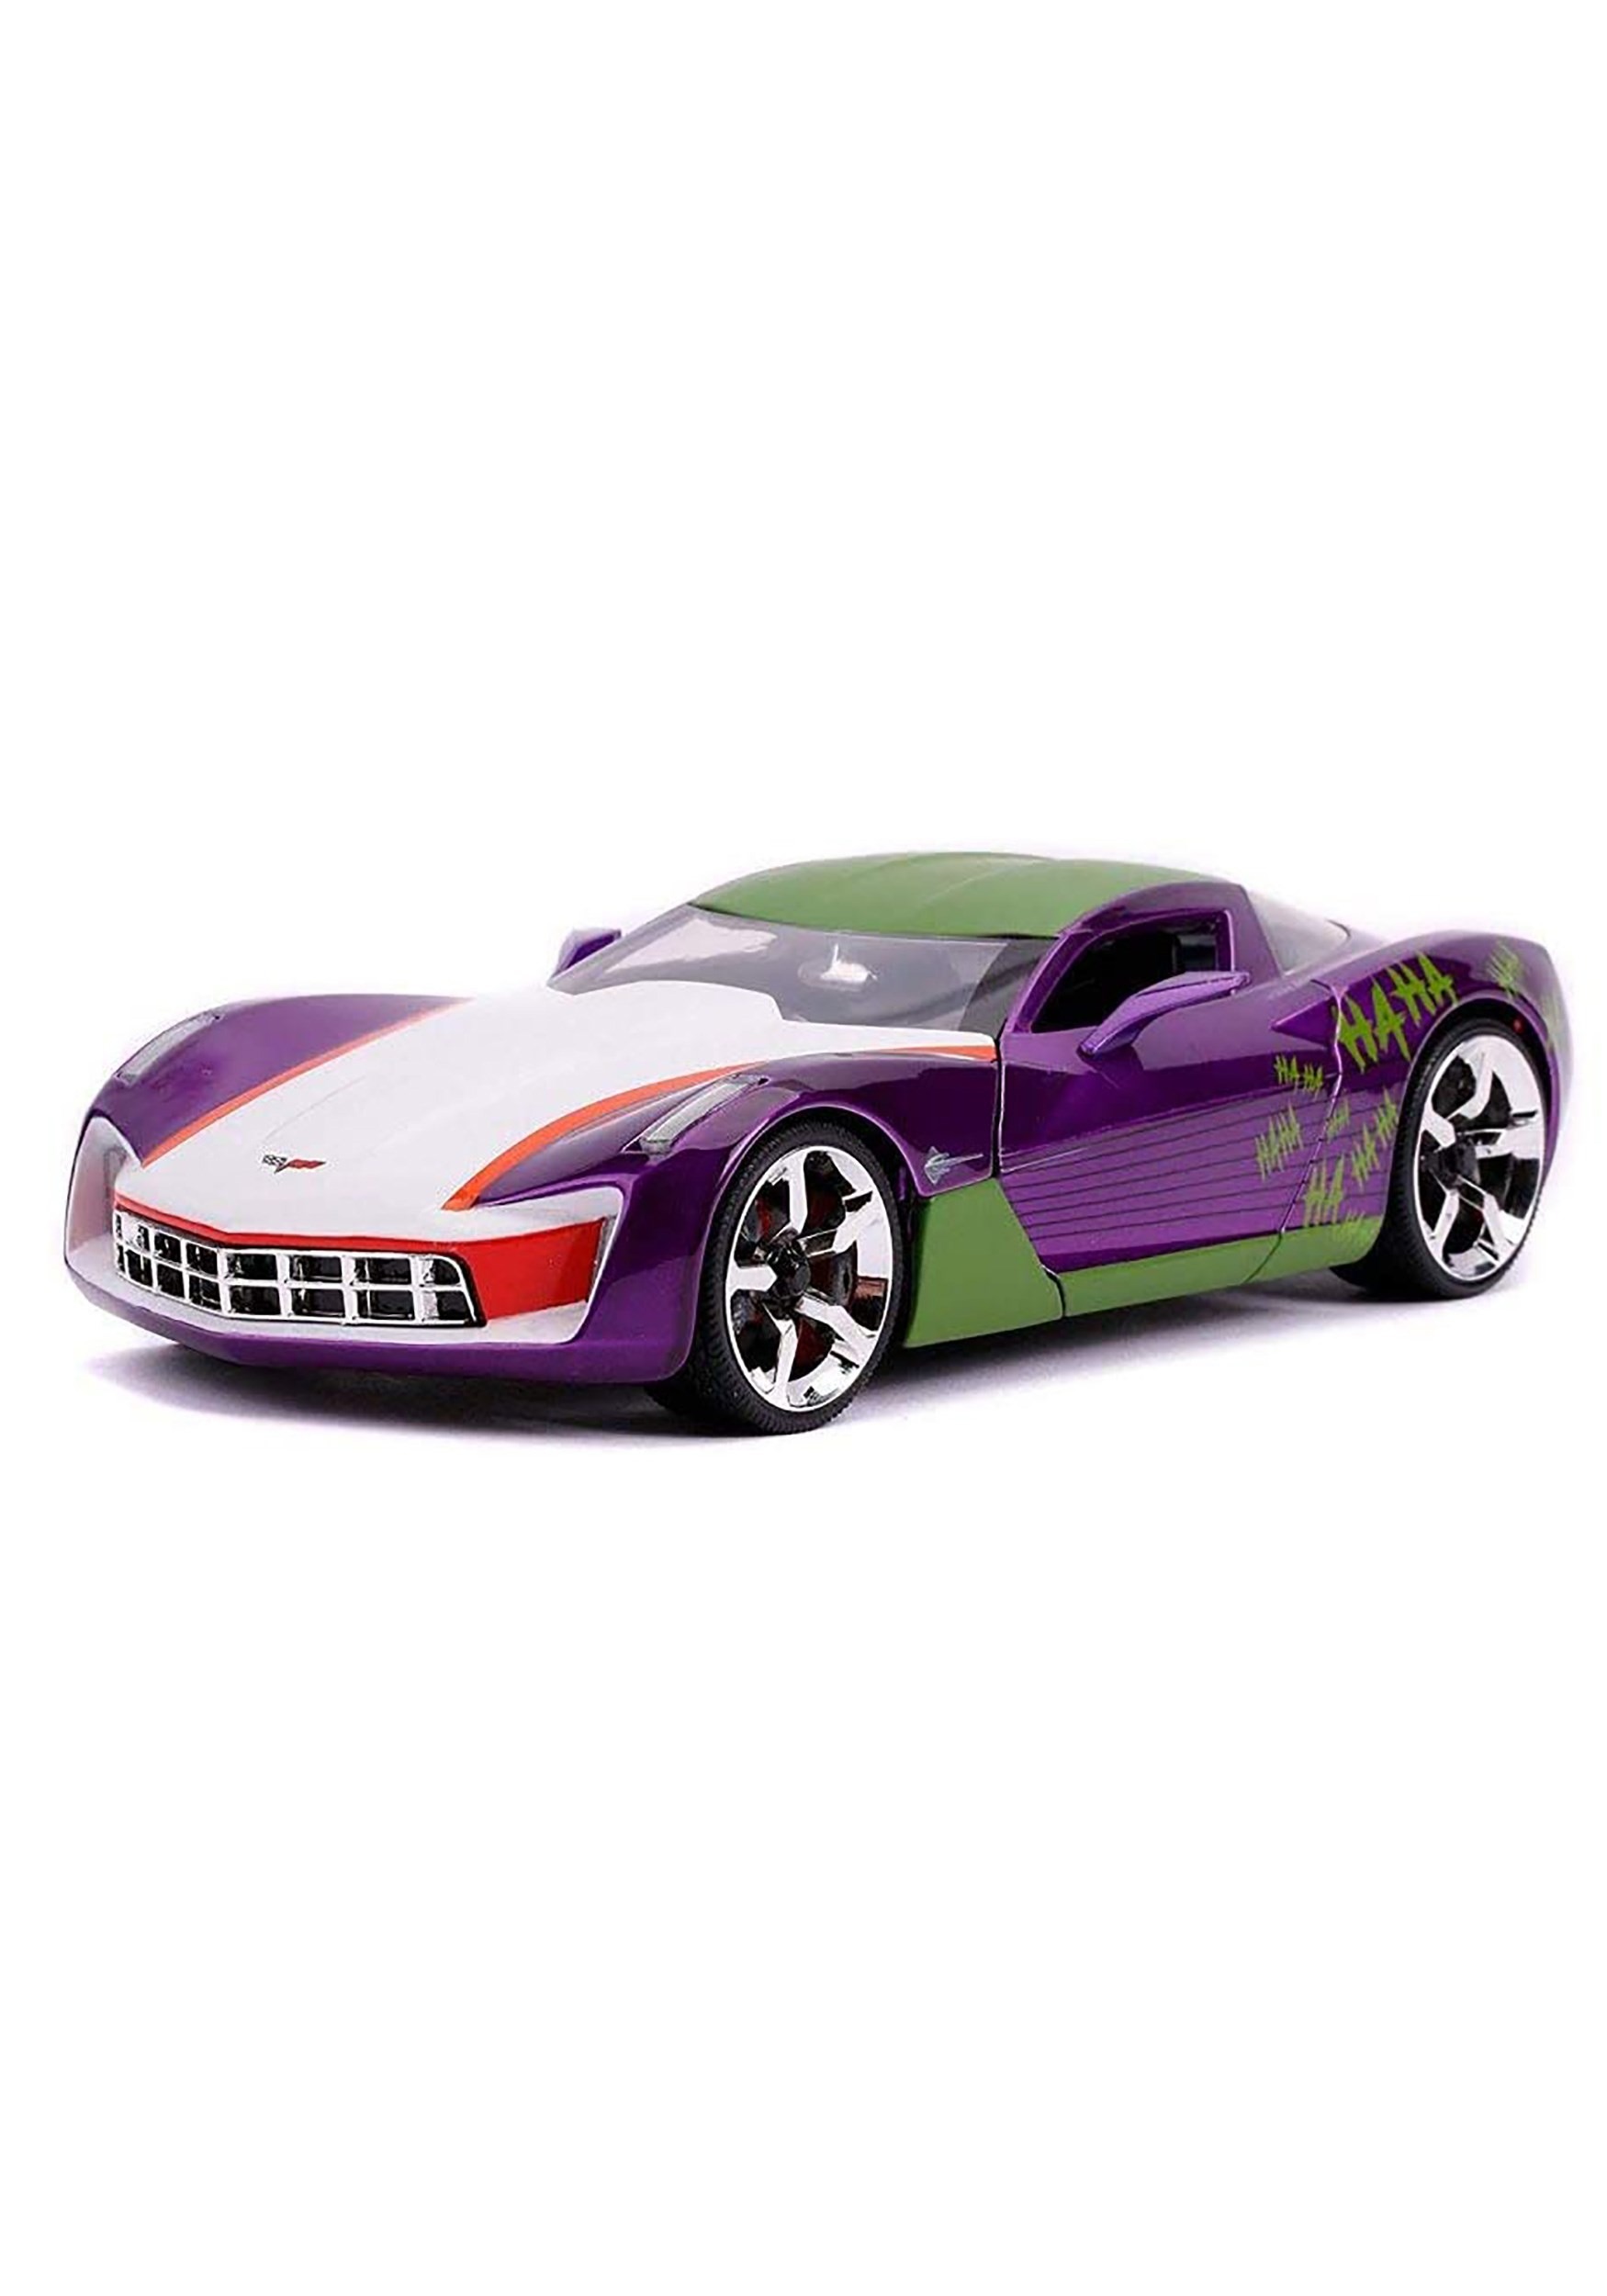 2009 Corvette Stingray diecast model car 1:24 scale die cast by